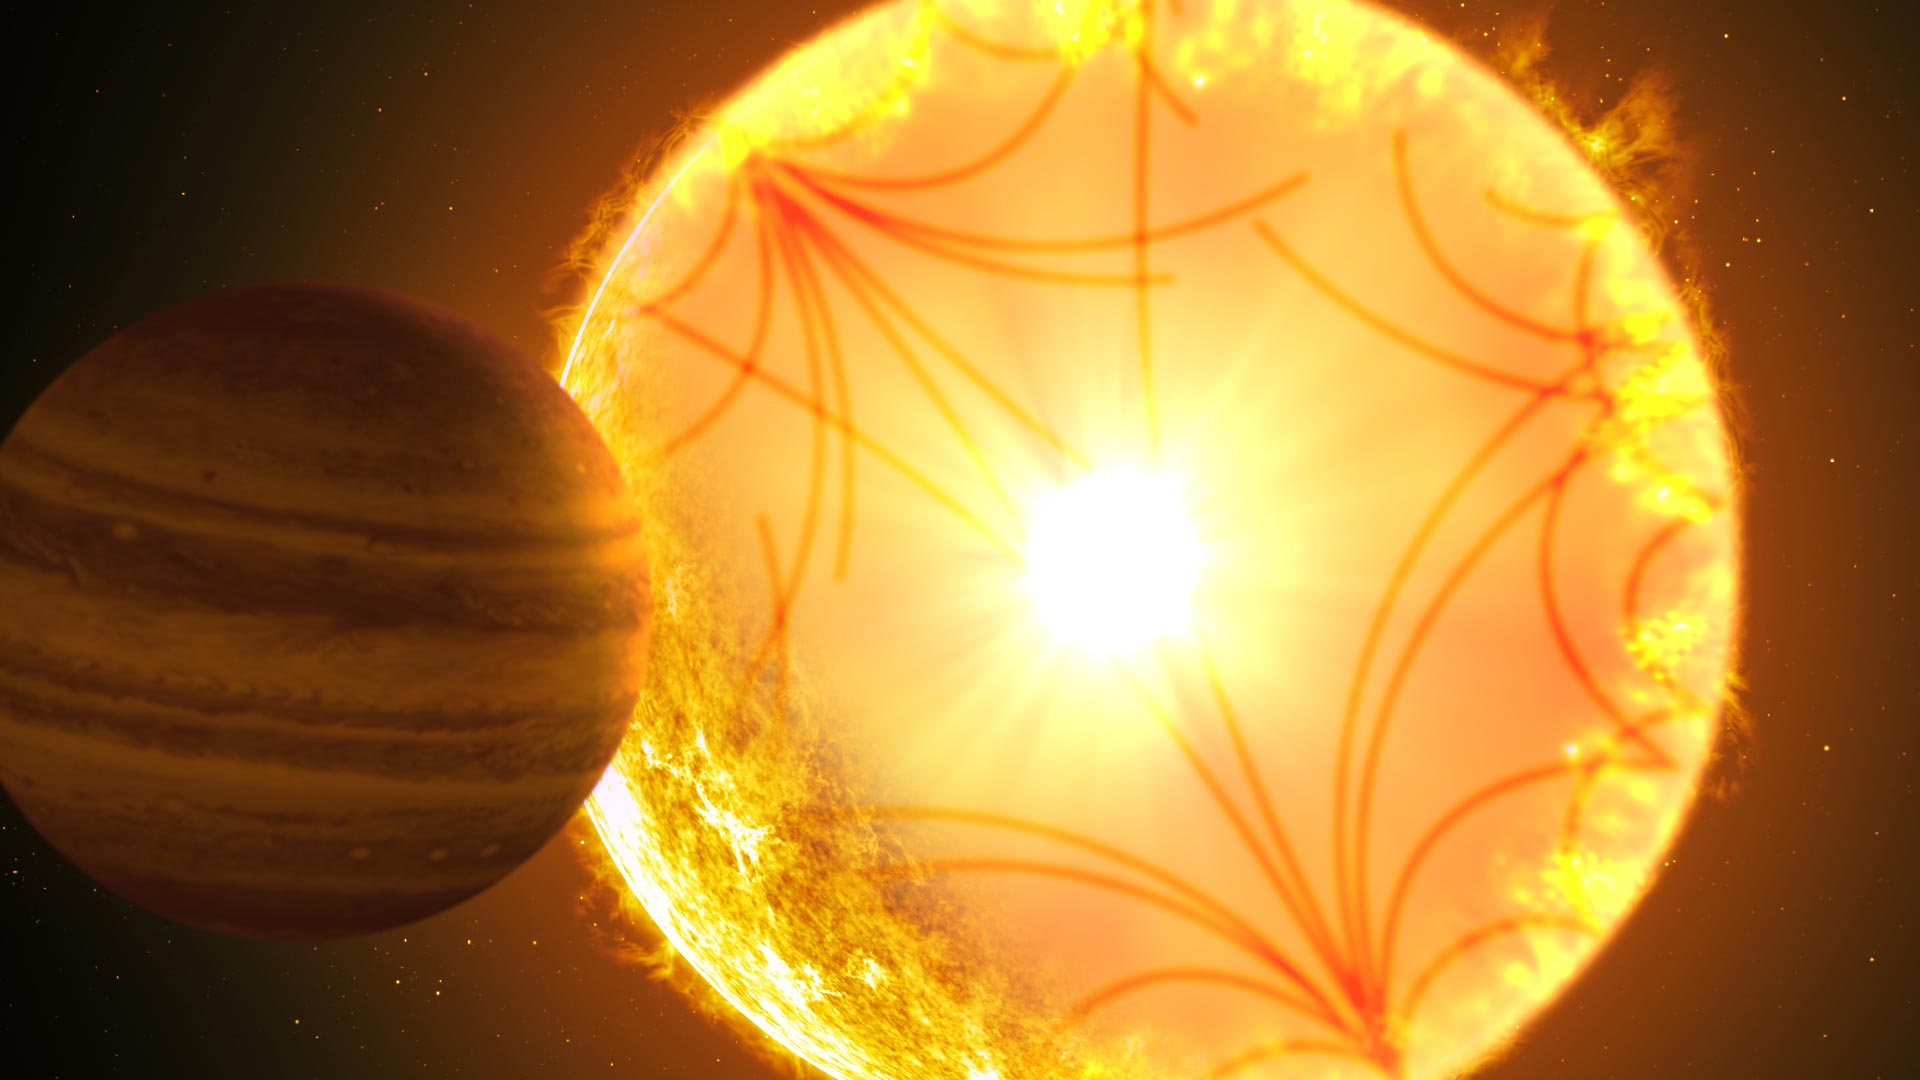 Astronomers discover an exoplanet spiraling towards destruction